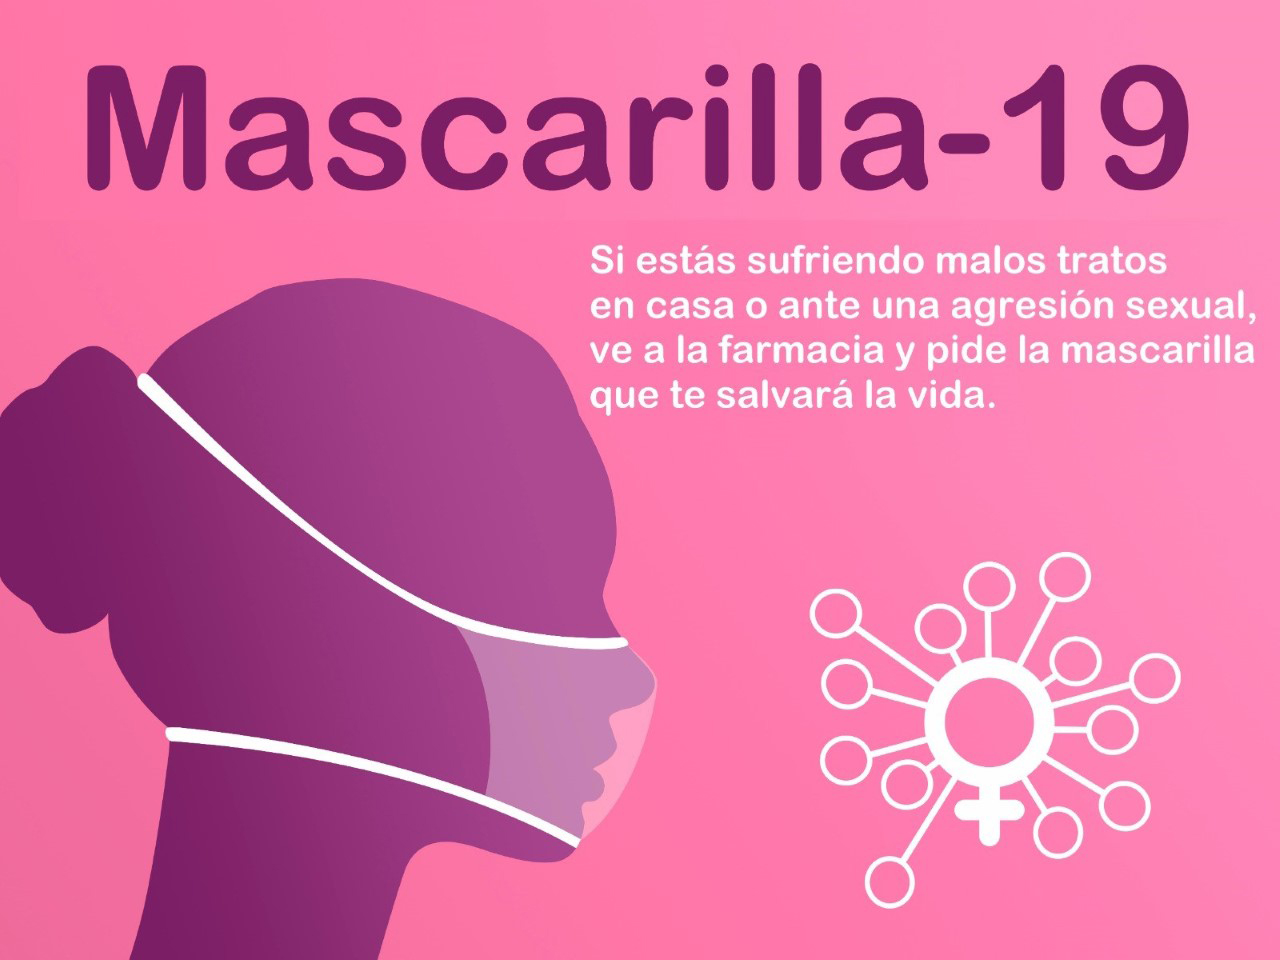 Amorebieta-Etxano se suma a la campaña ‘Mascarilla 19’ para proteger a las mujeres maltratadas